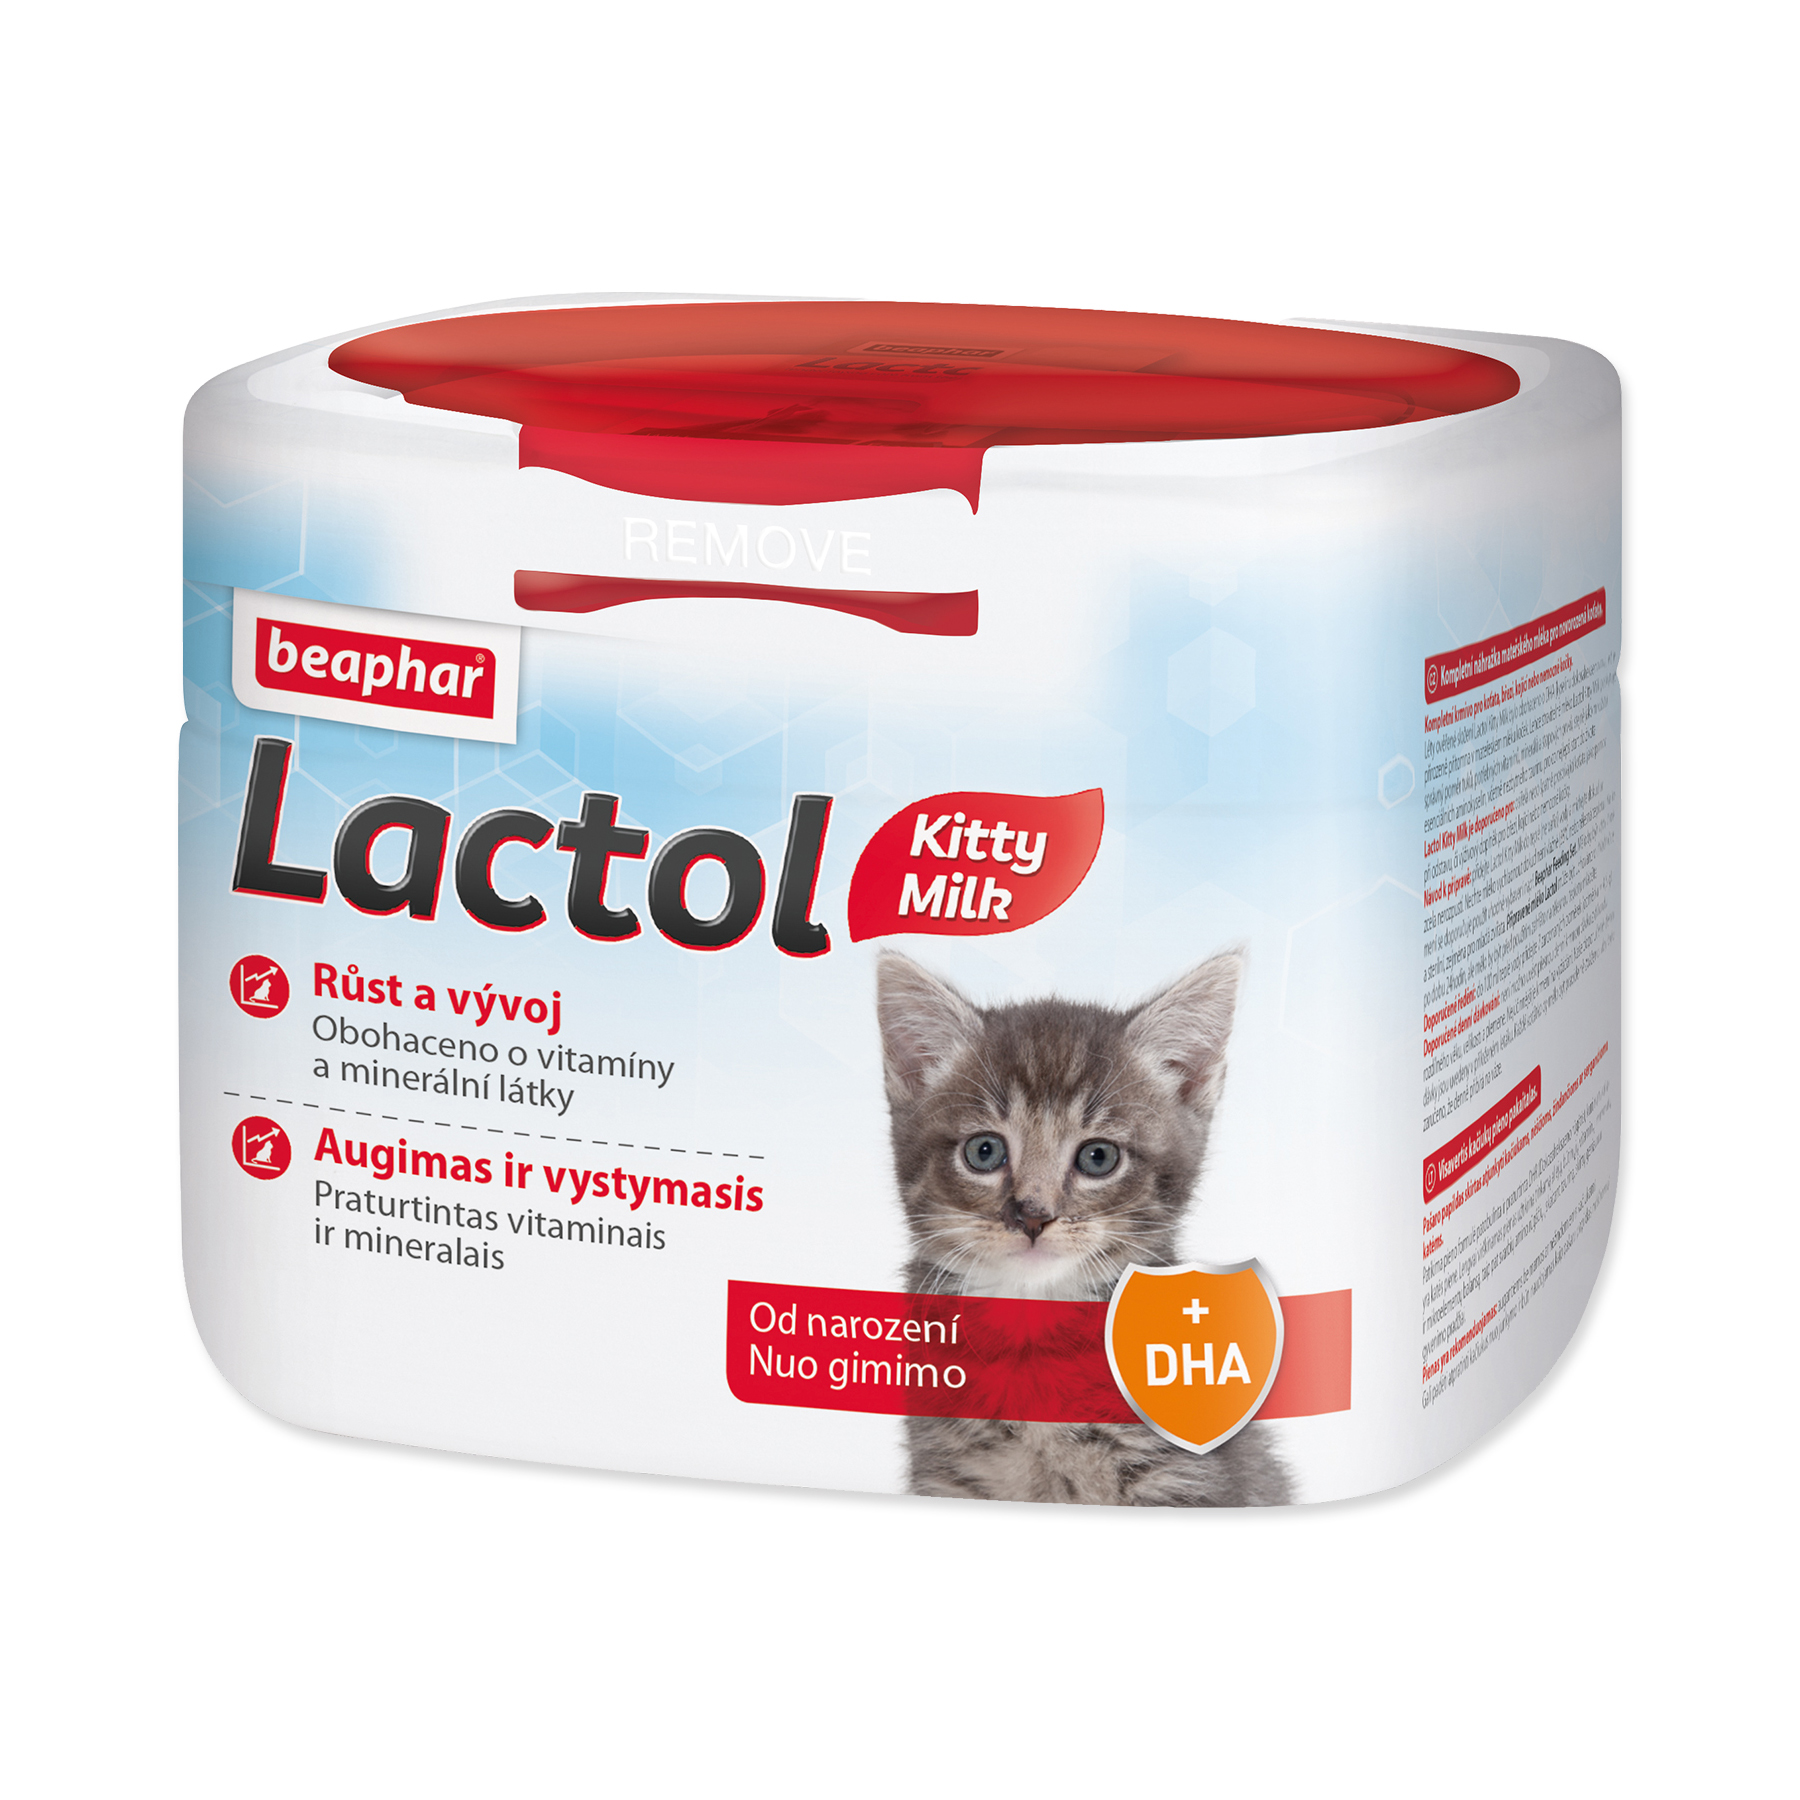 Beaphar Lactol Kitty mléko sušené 250 g Beaphar